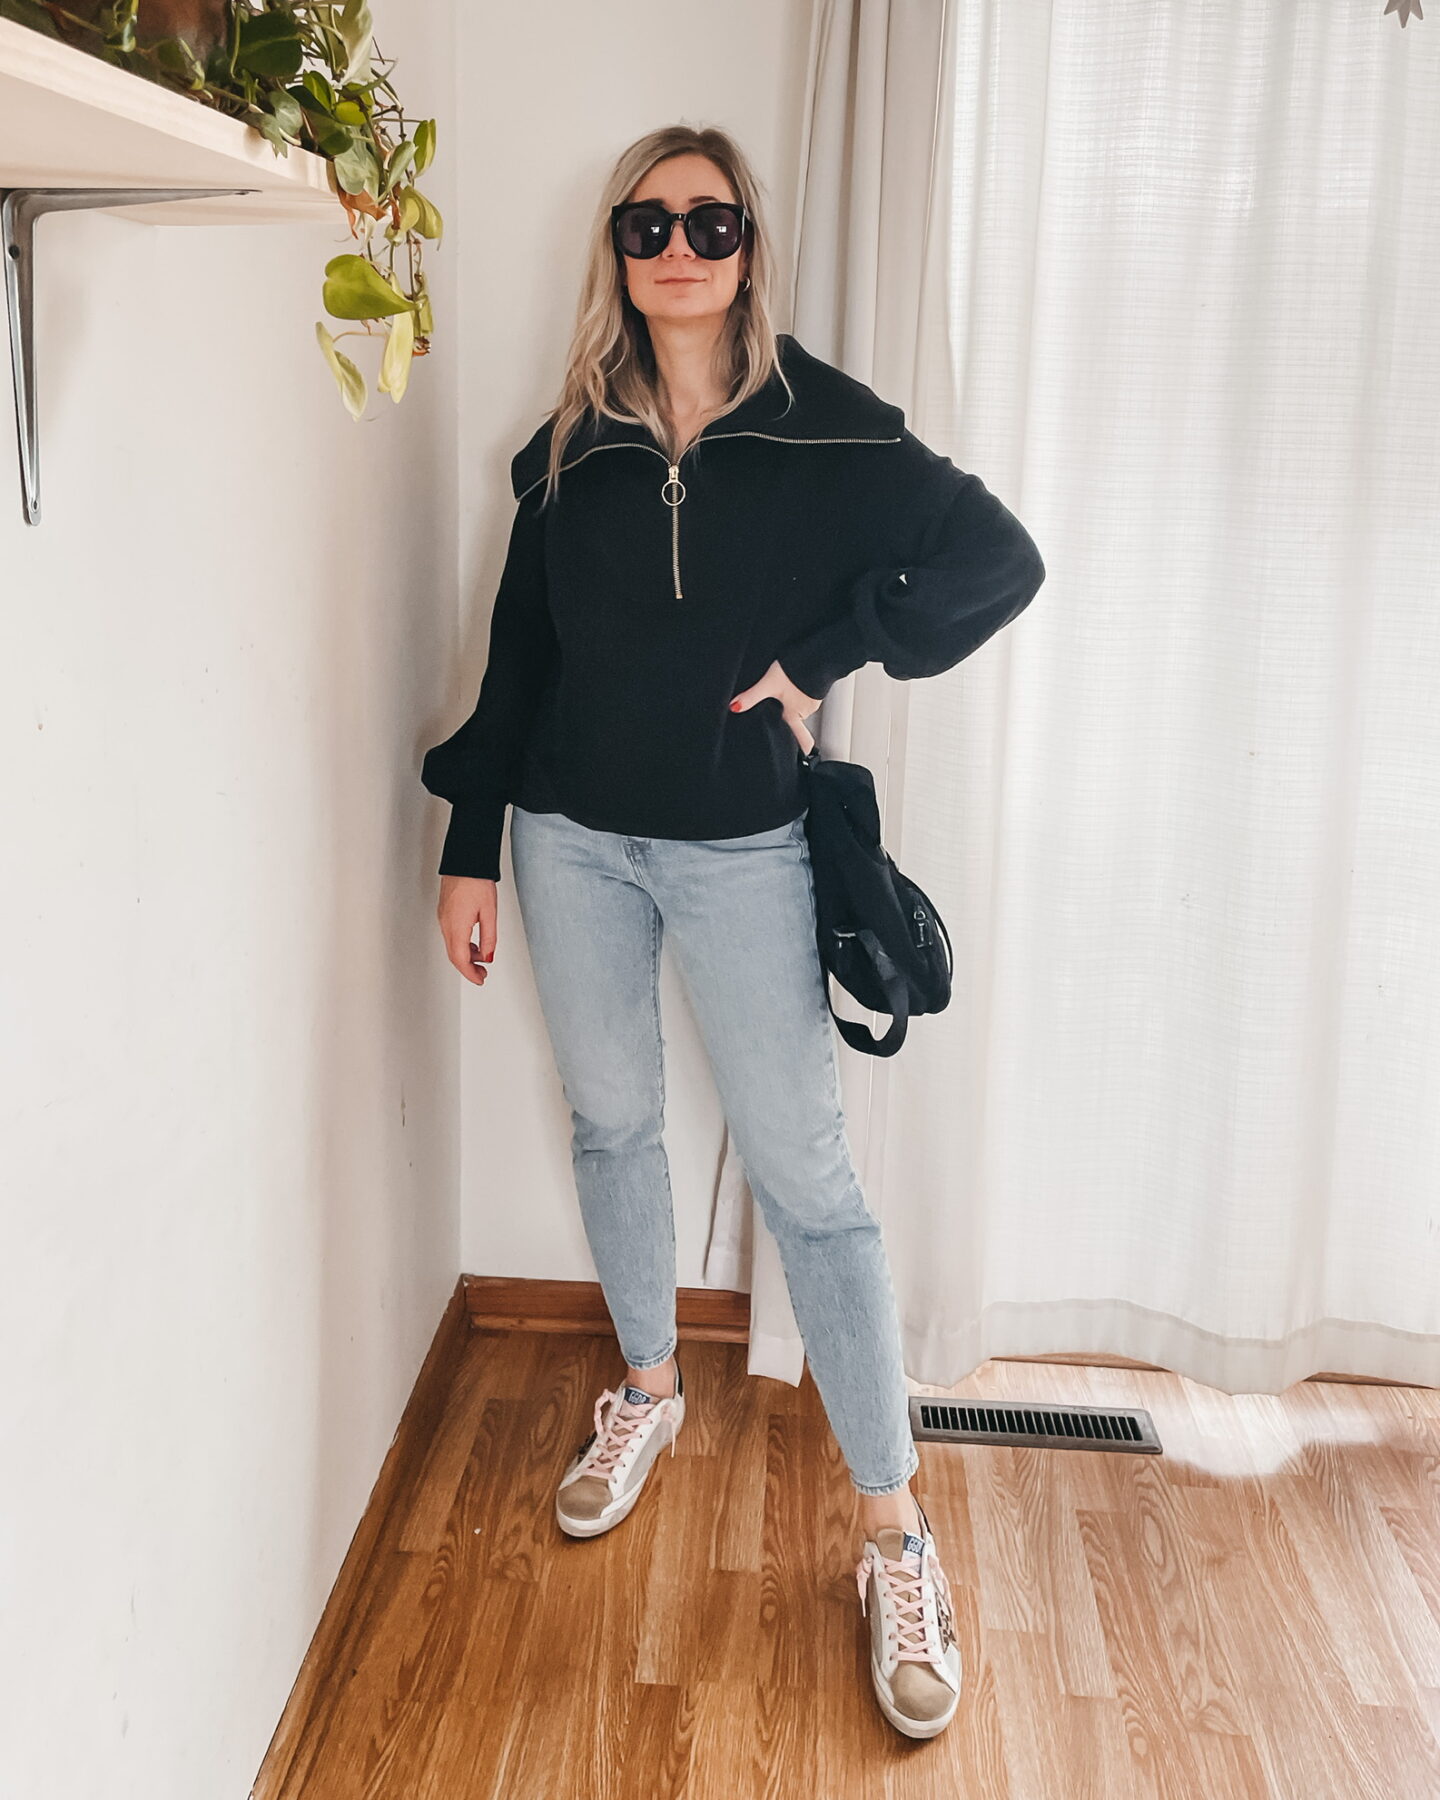 Karin Emily wears a Varley Half Zip Sweatshirt, Light Wash Jeans, and Golden Goose Sneakers